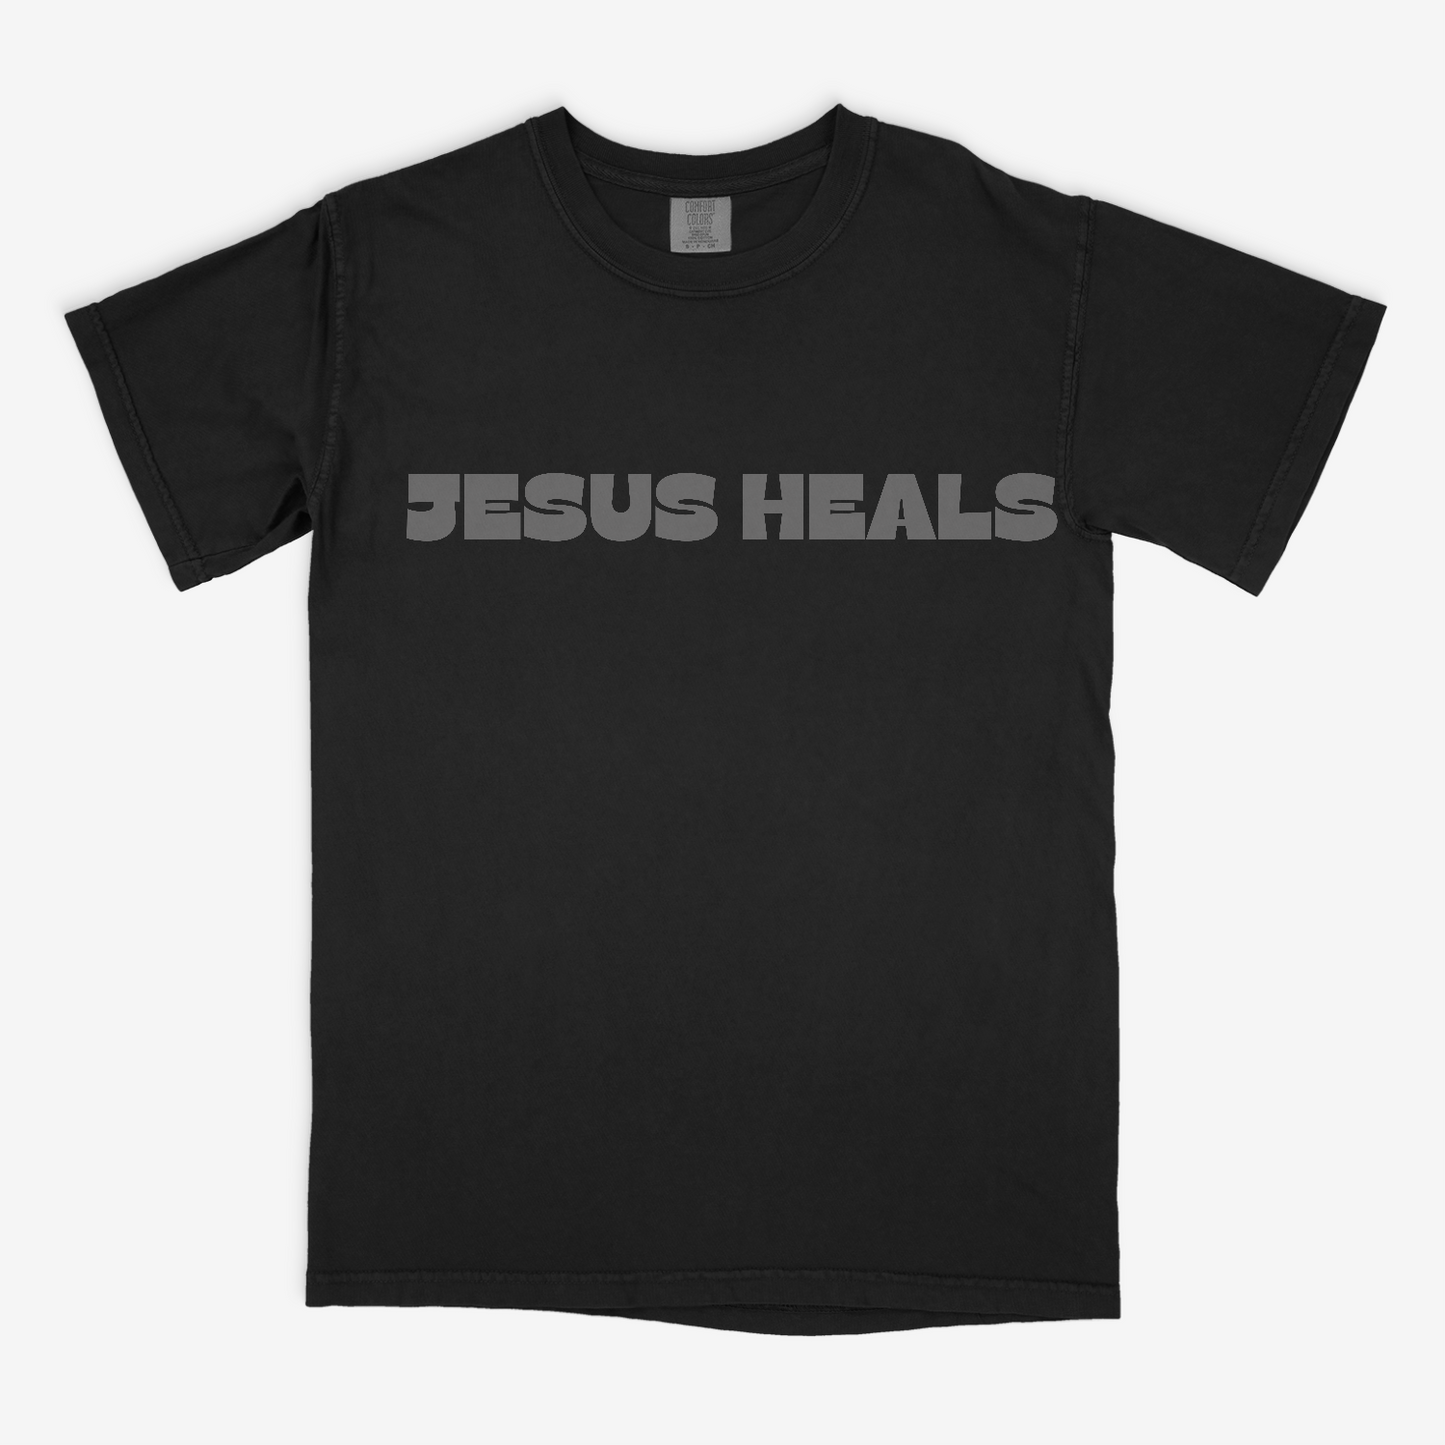 Jesus heals black Tshirt